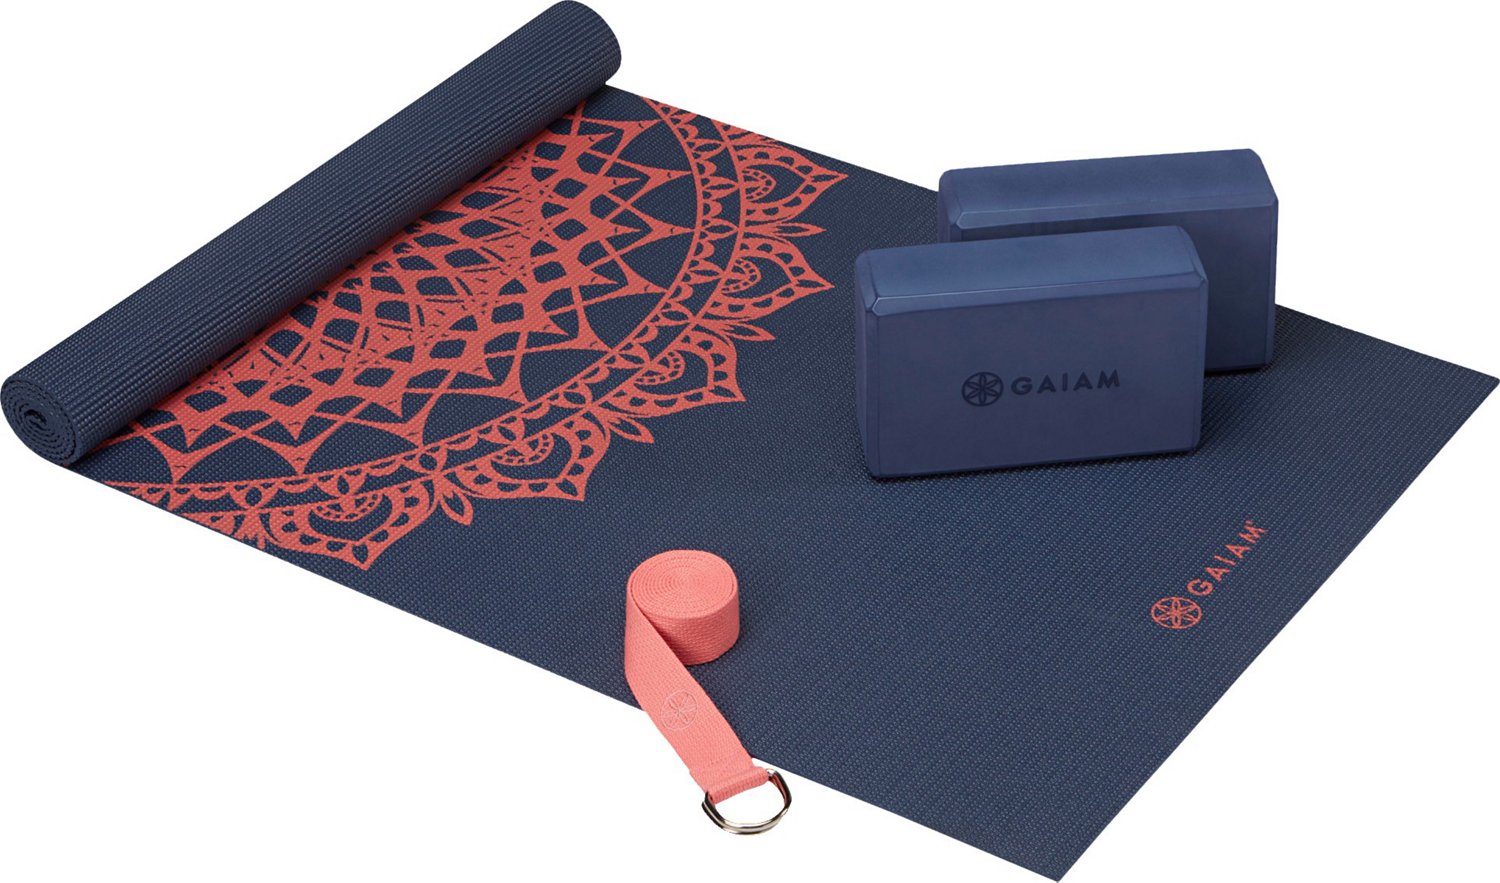 Gaiam Premium Yoga Mat  Free Shipping at Academy